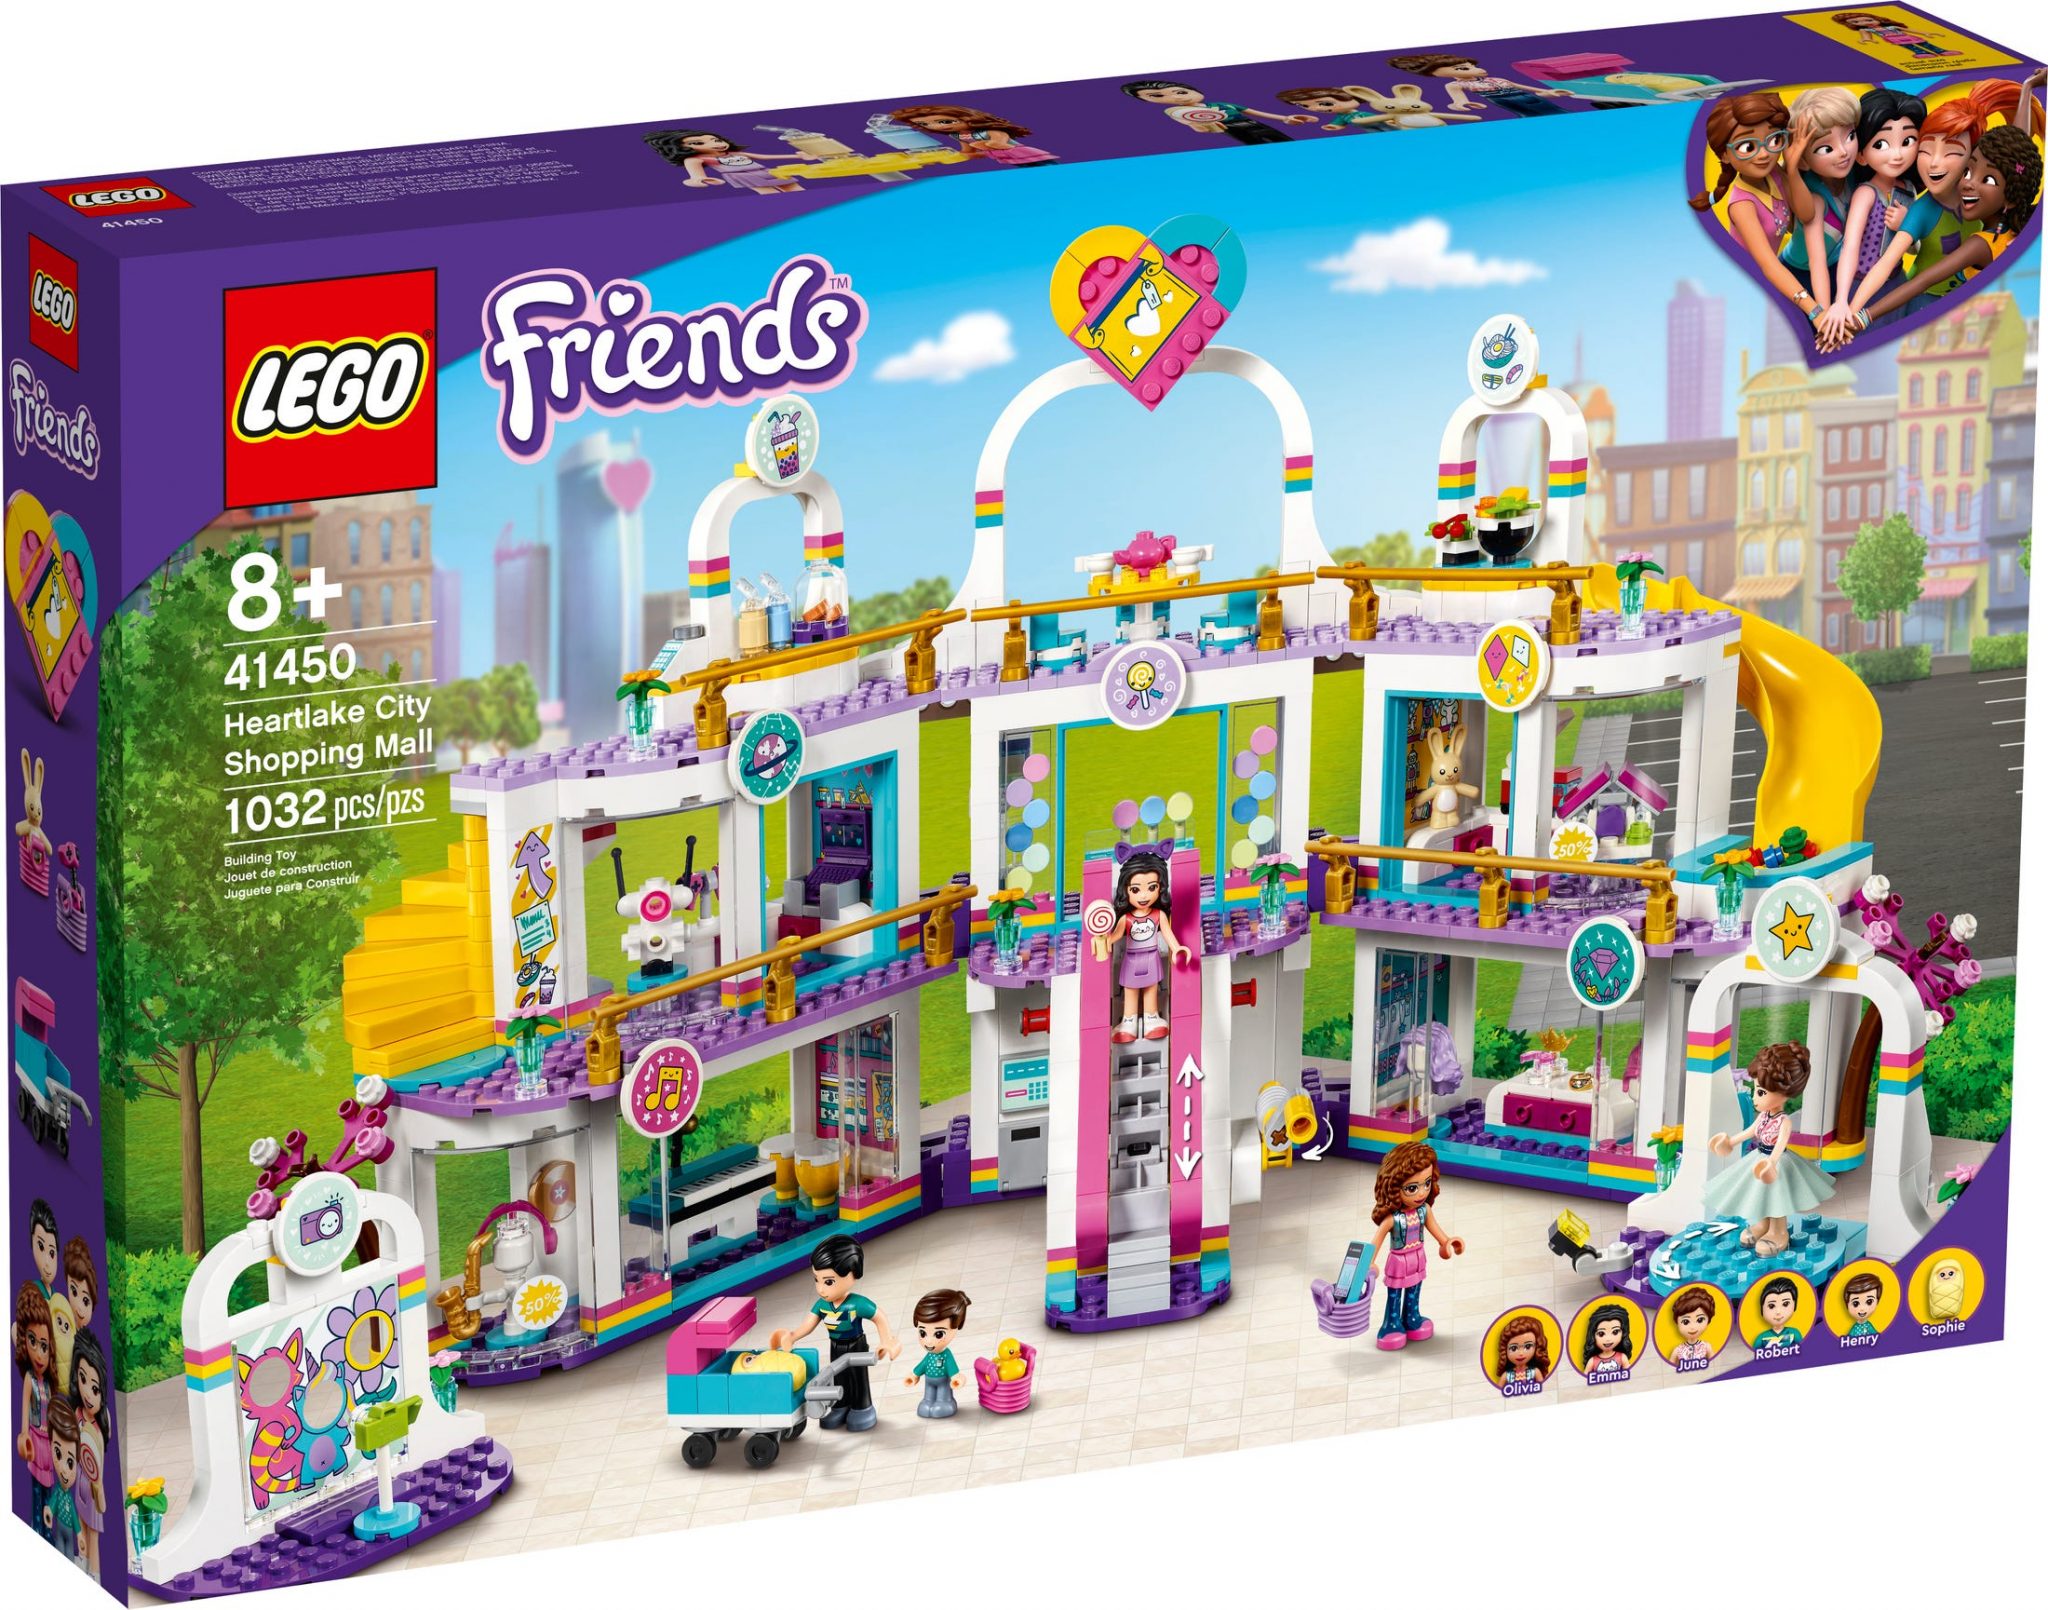 Lego Friends Buy Now Brickbuilder Australia Lego Shop